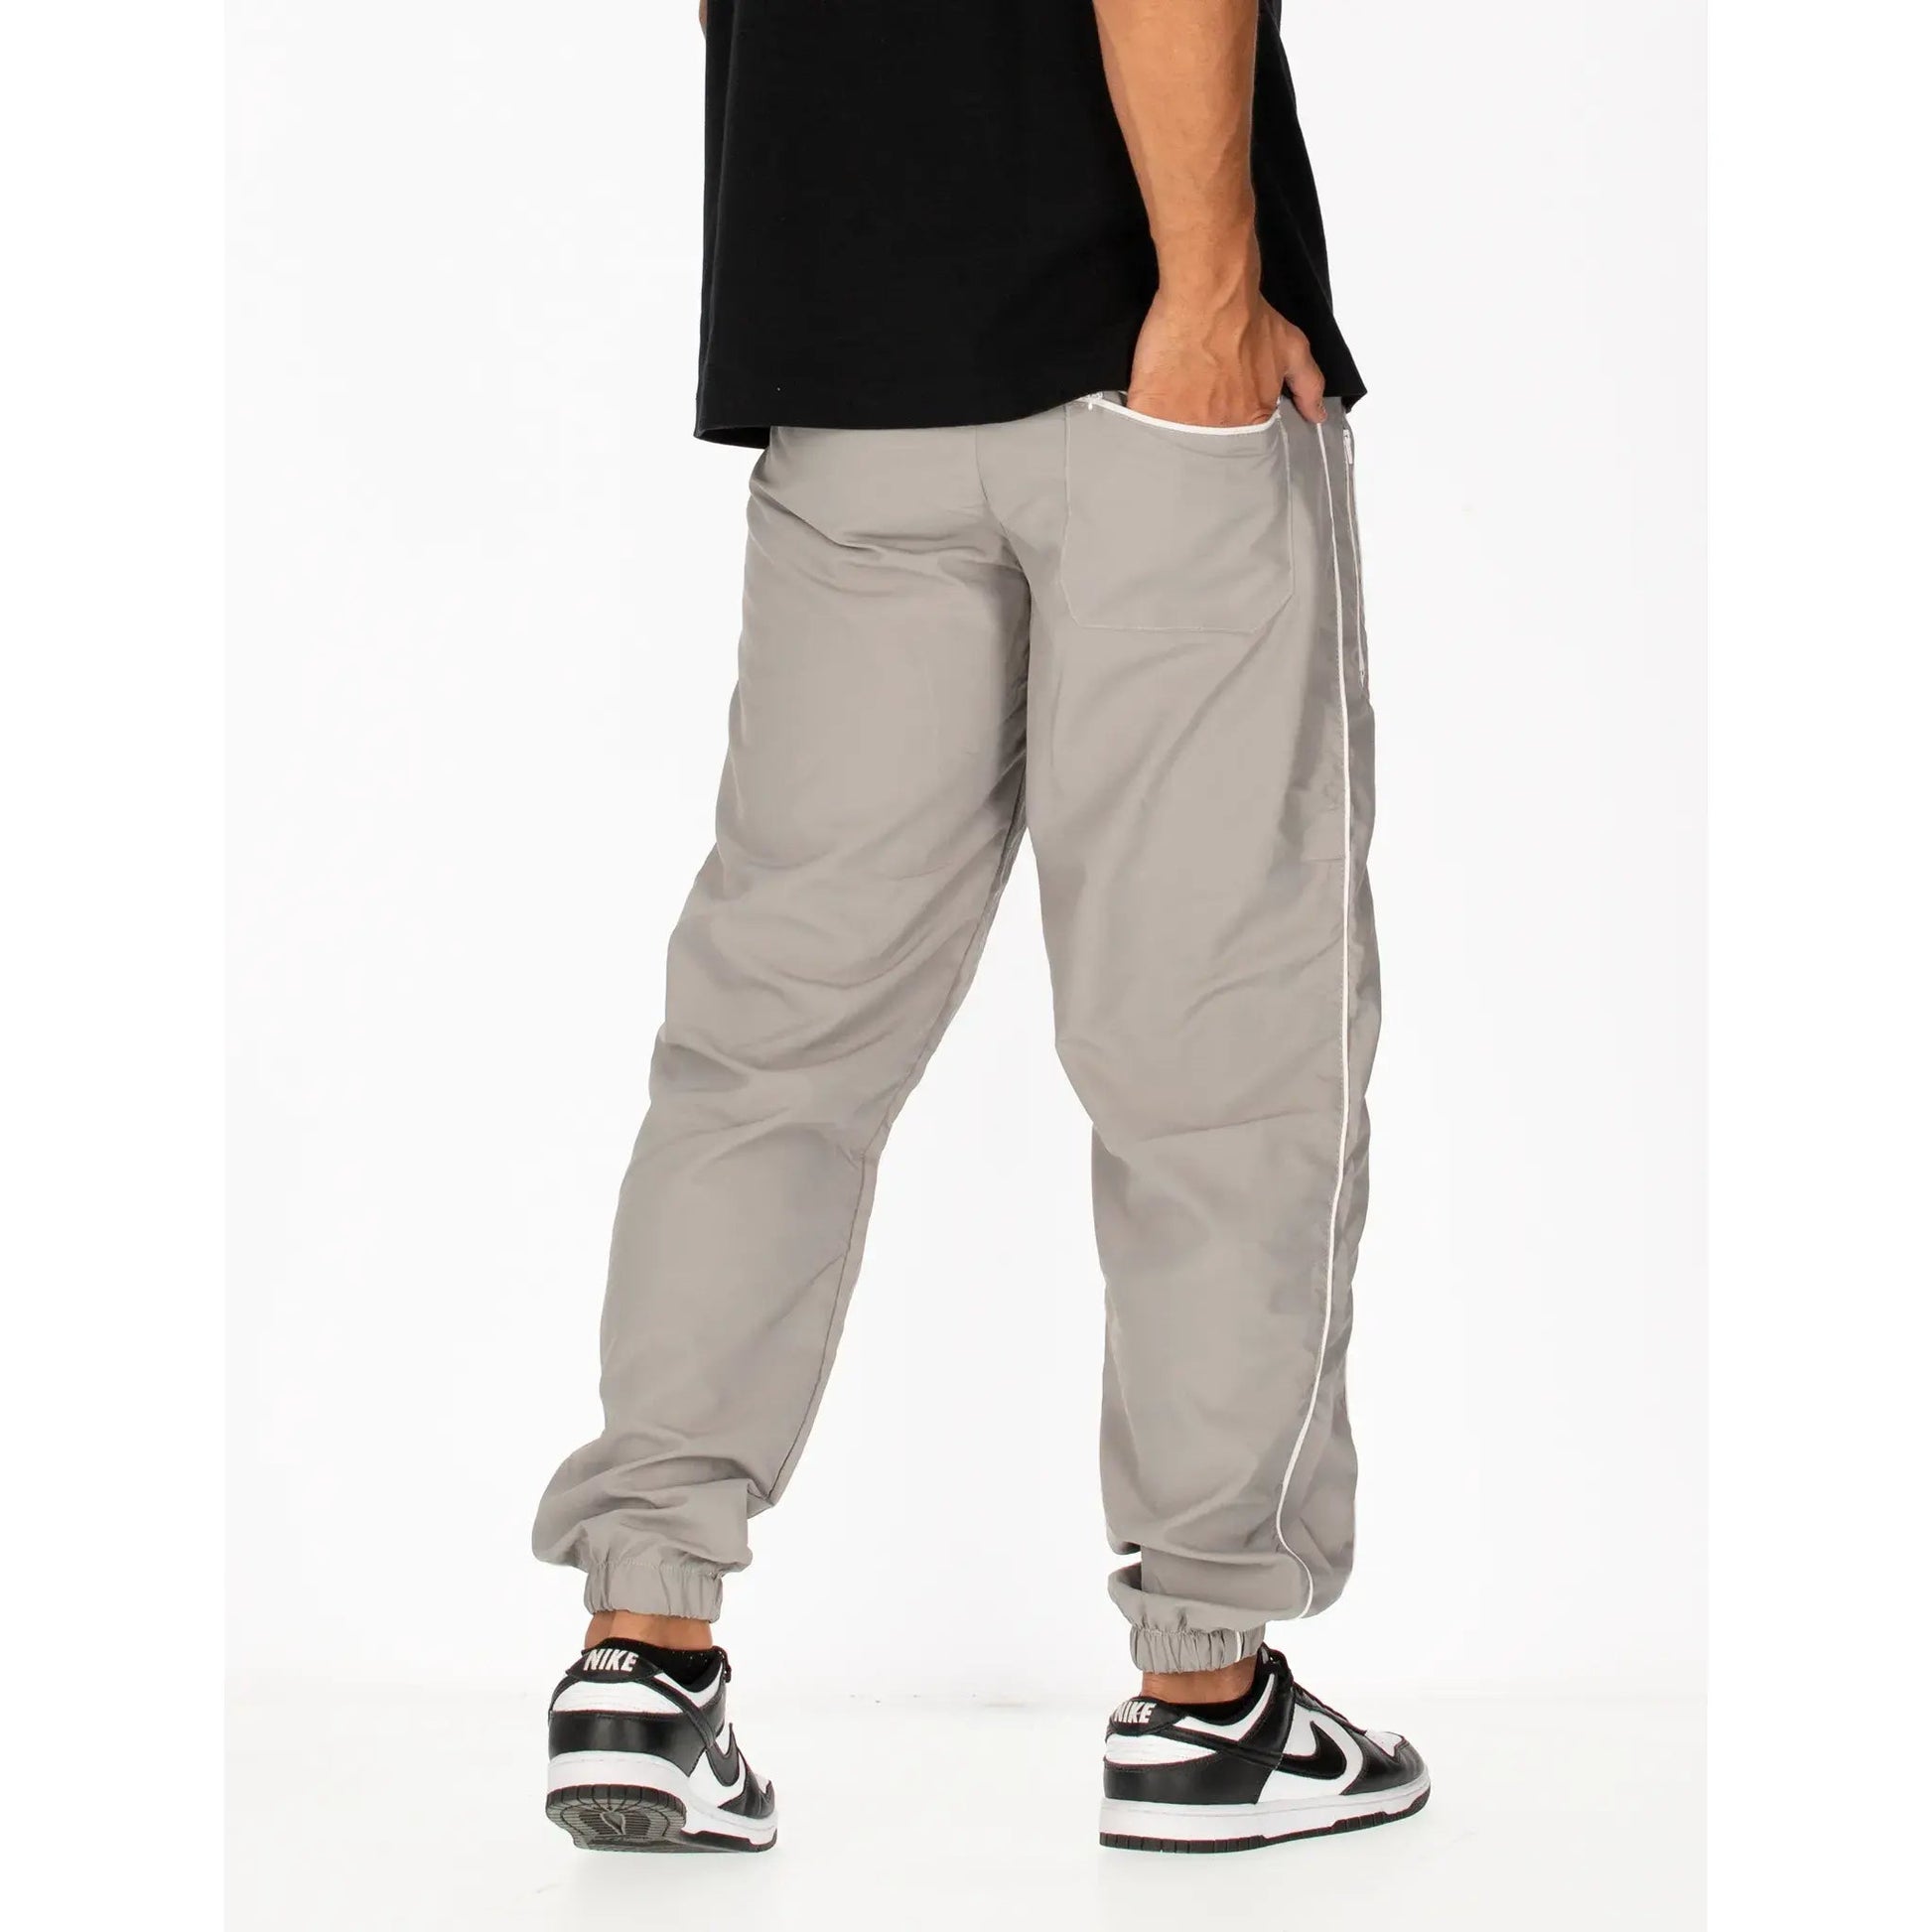 Soft Gray Jogger Zipper Pants - Gris Claro 7608